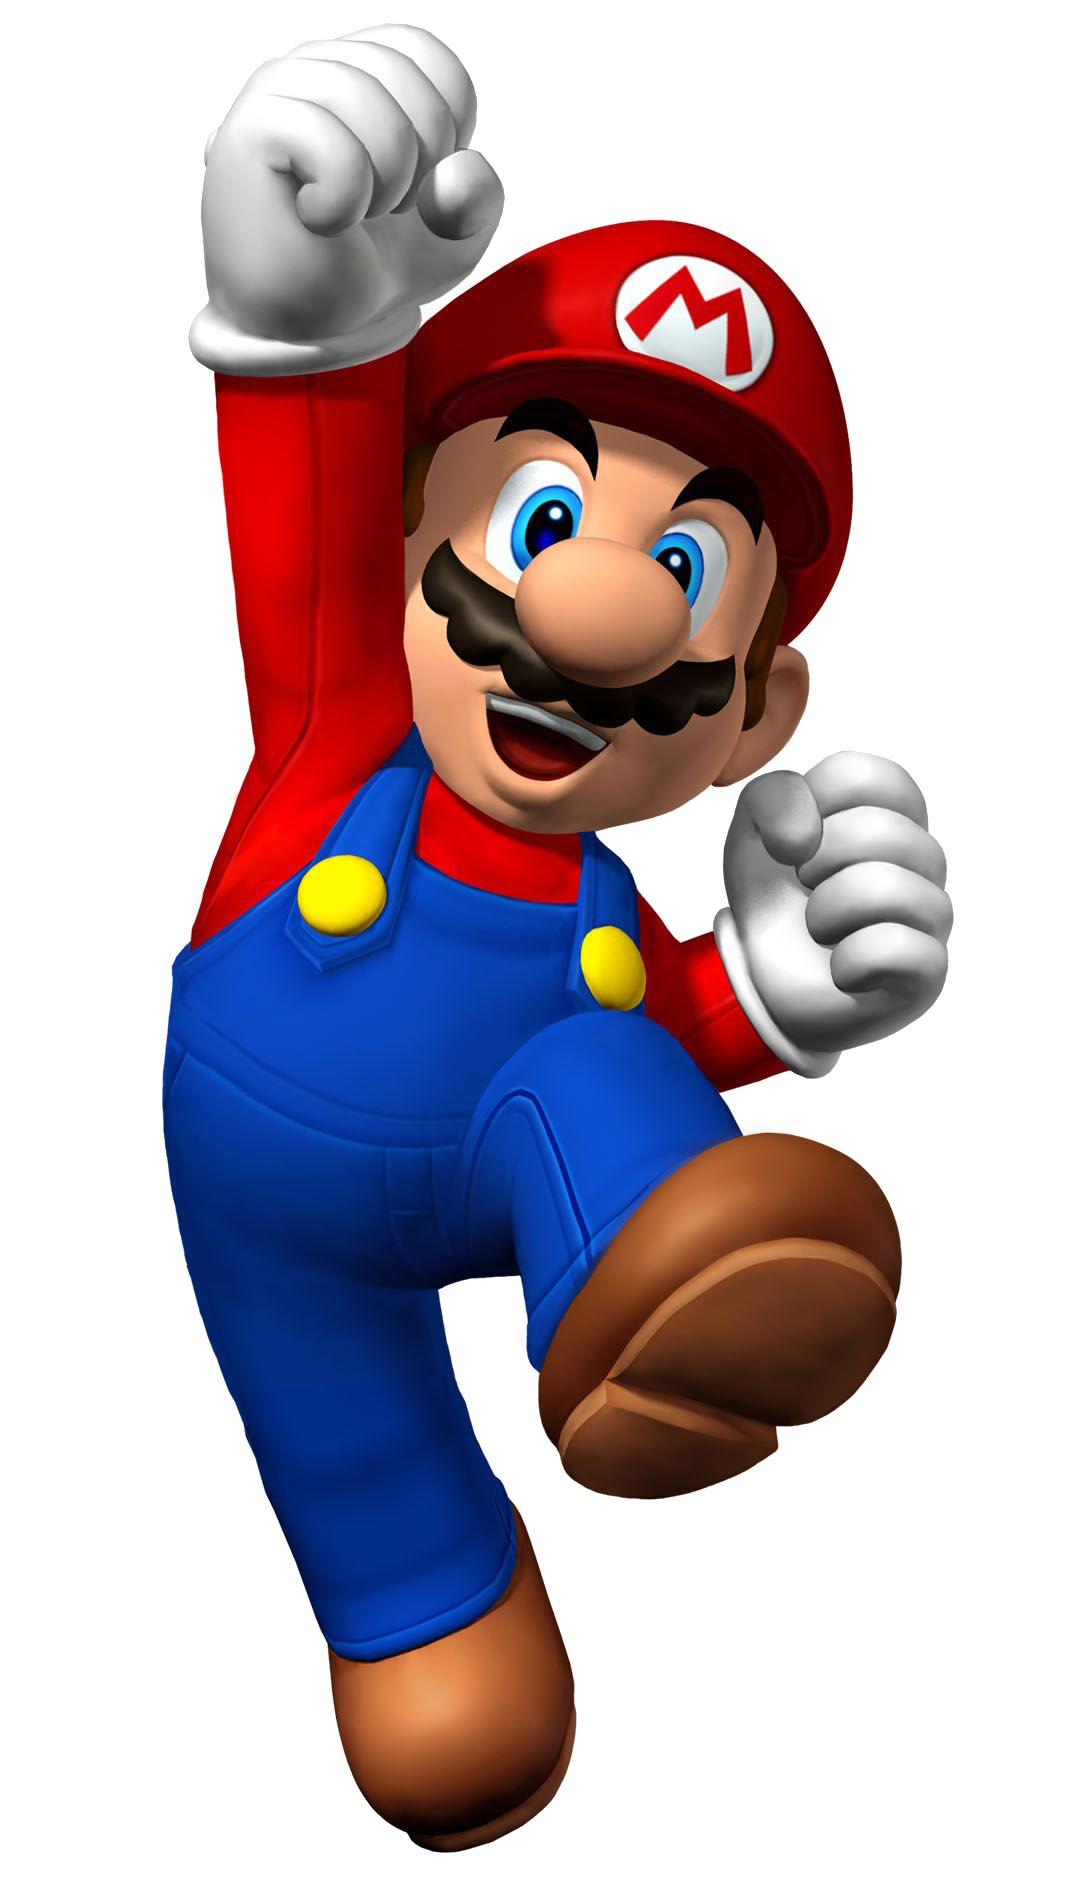 Mario Image PNG Image